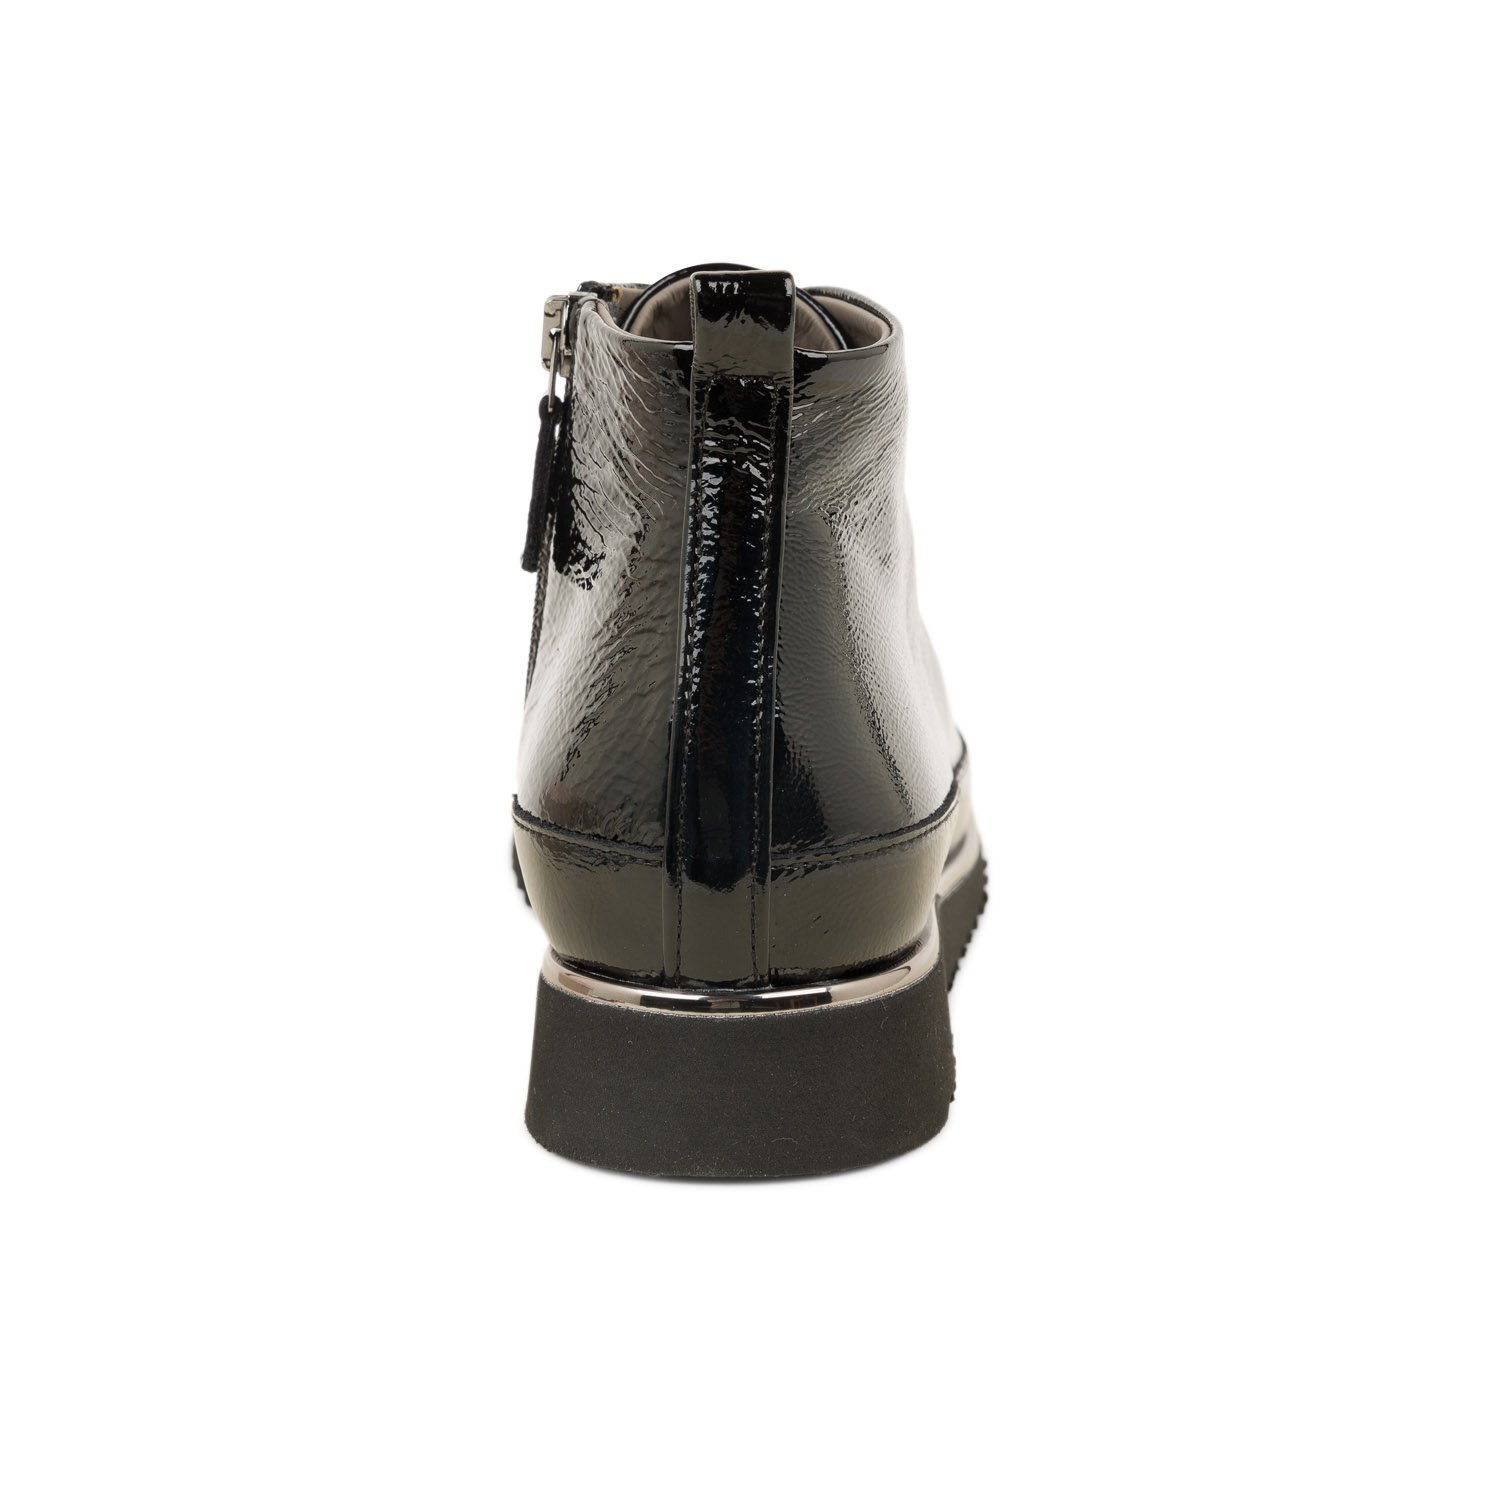 03 - XOXO - XSA - Boots et bottines - Cuir verni